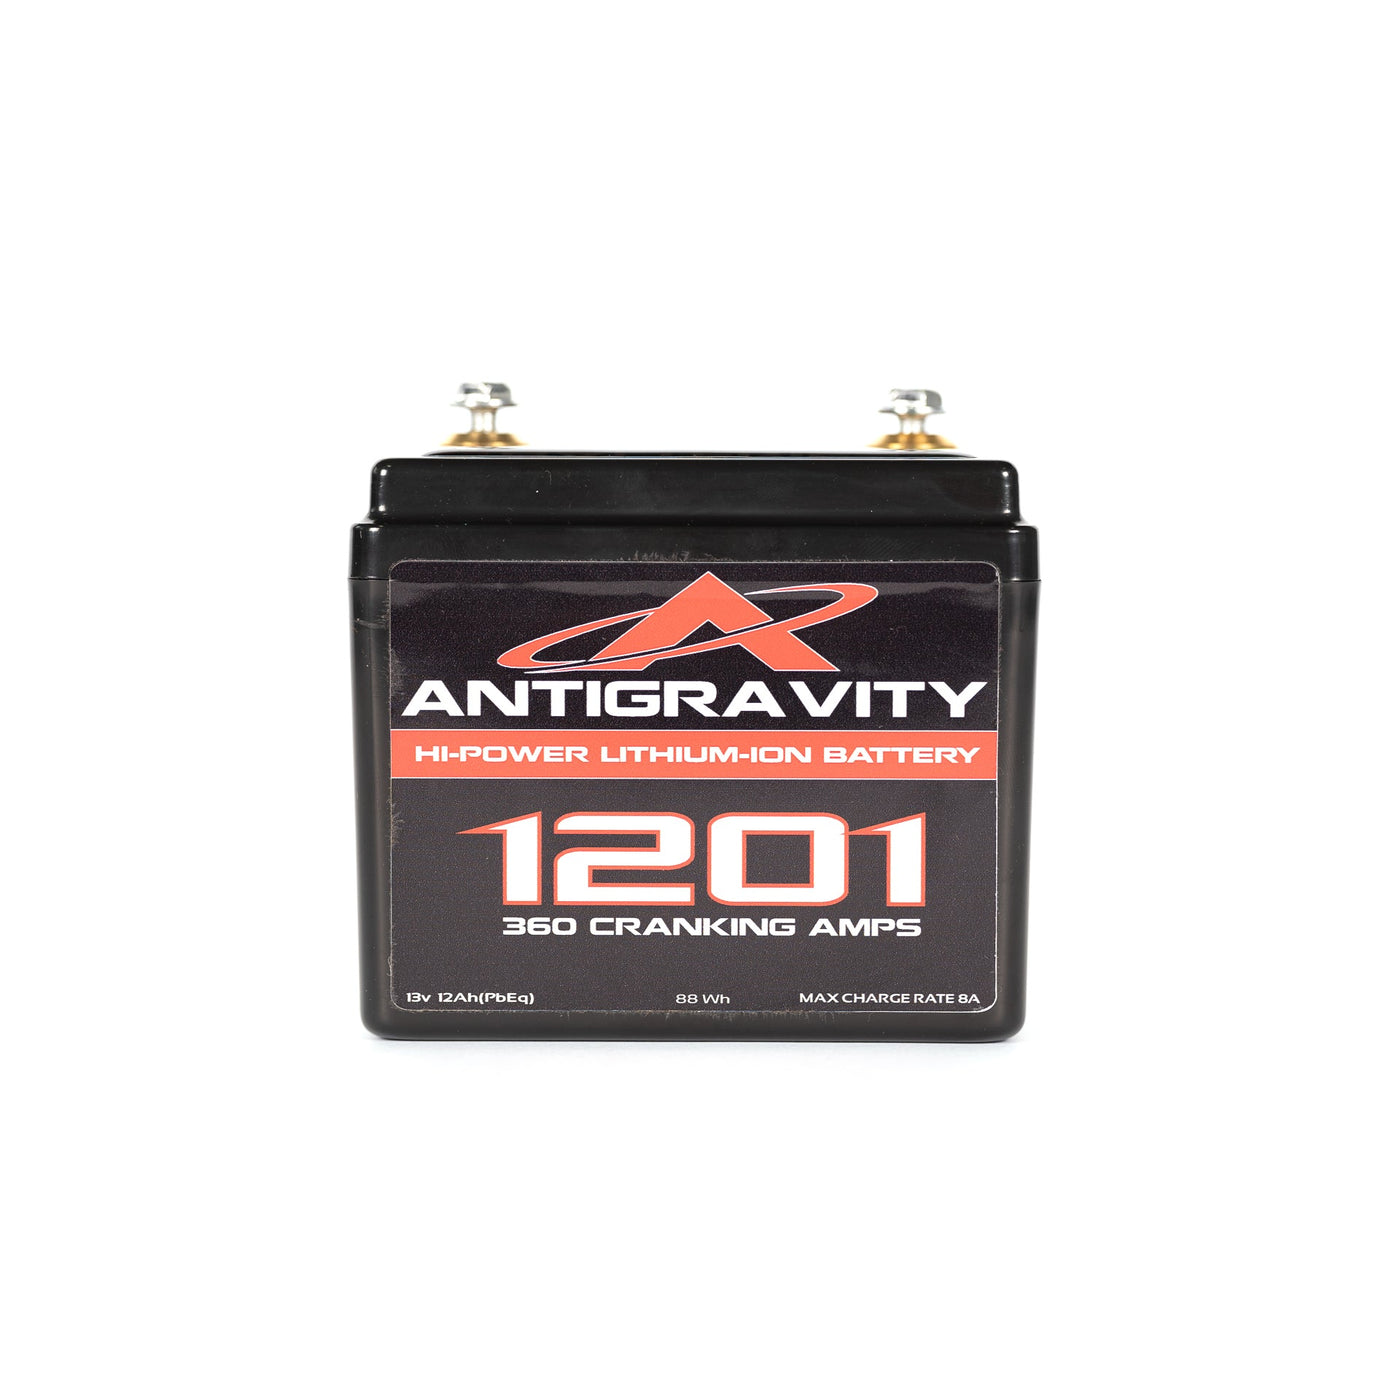 Antigravity Battery - Prism Supply